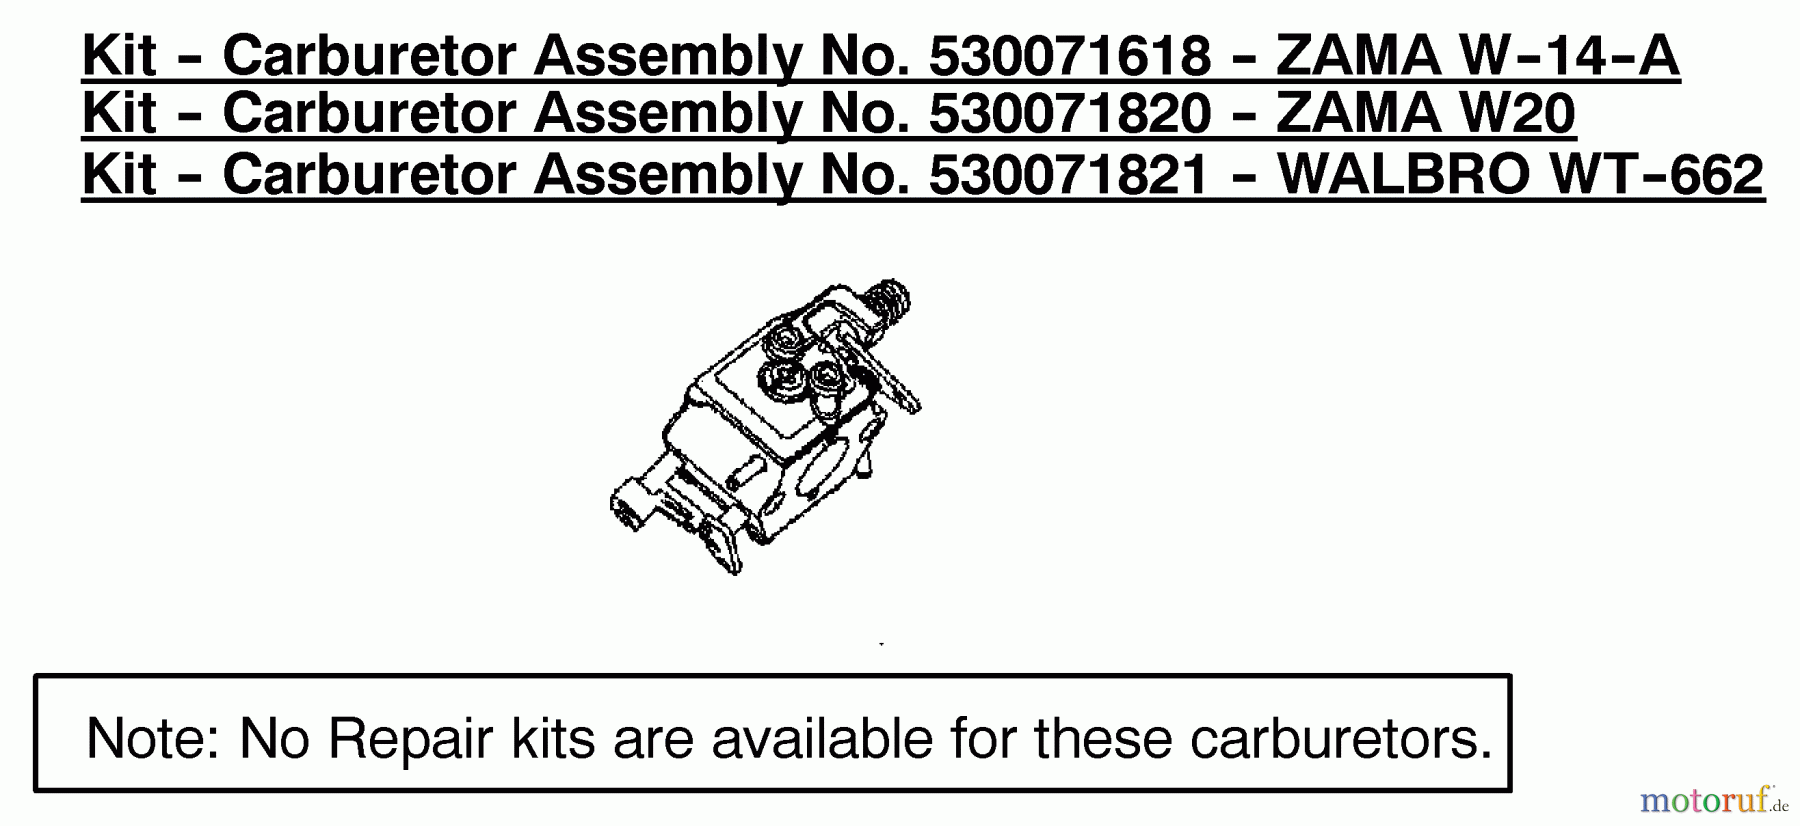  Poulan / Weed Eater Motorsägen 1975 (Type 2) - Poulan Woodshark Chainsaw Carburetor Assembly (Zama W20) P/N 530071820